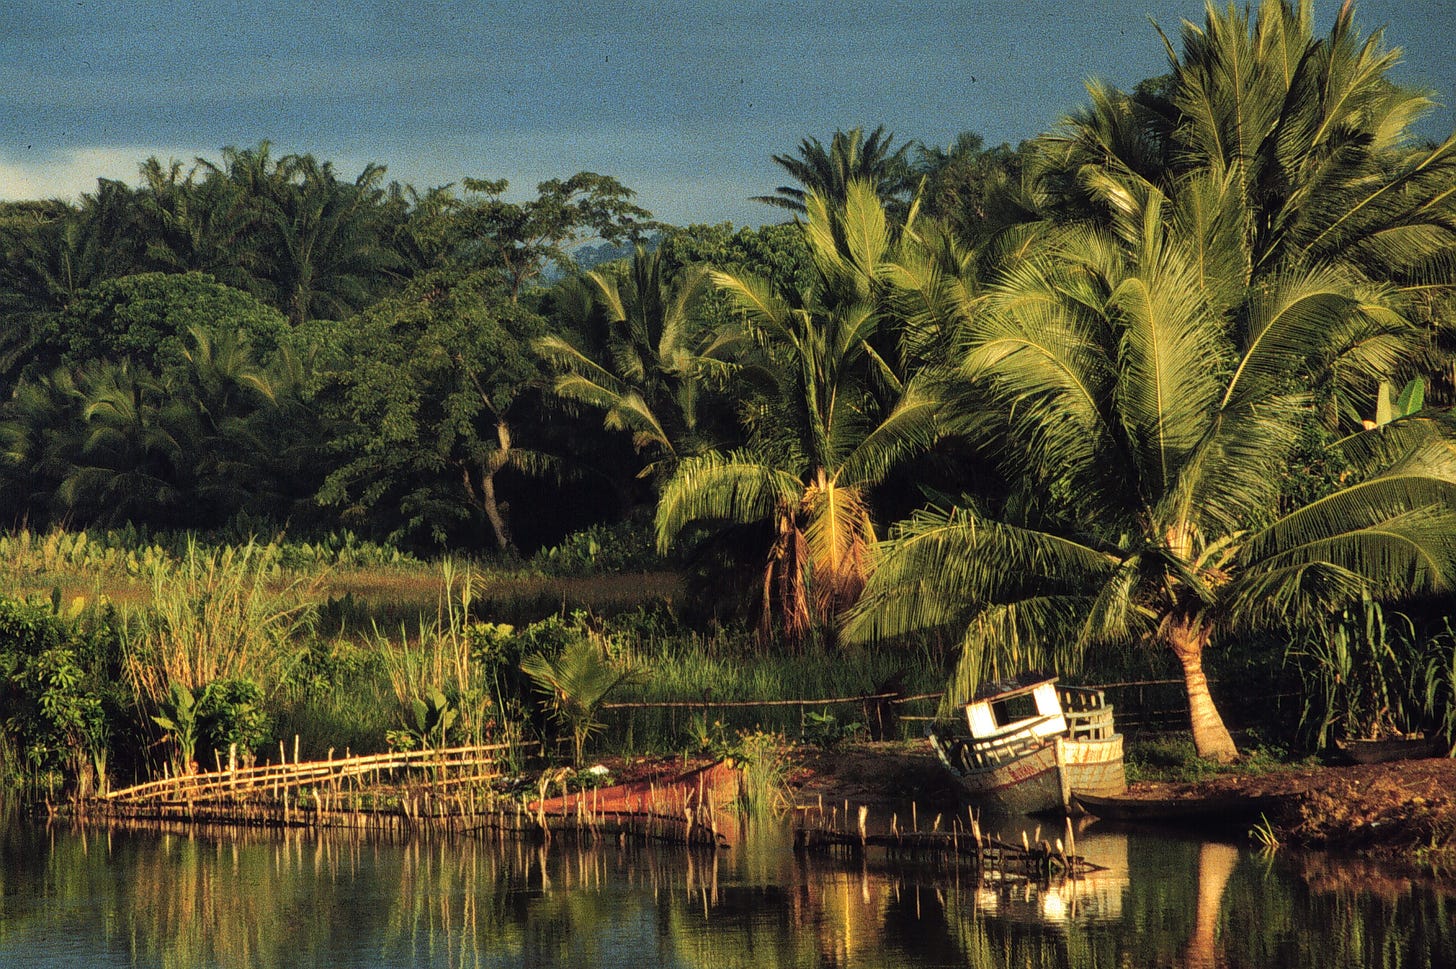 River's edge in Maroansetra, 1997